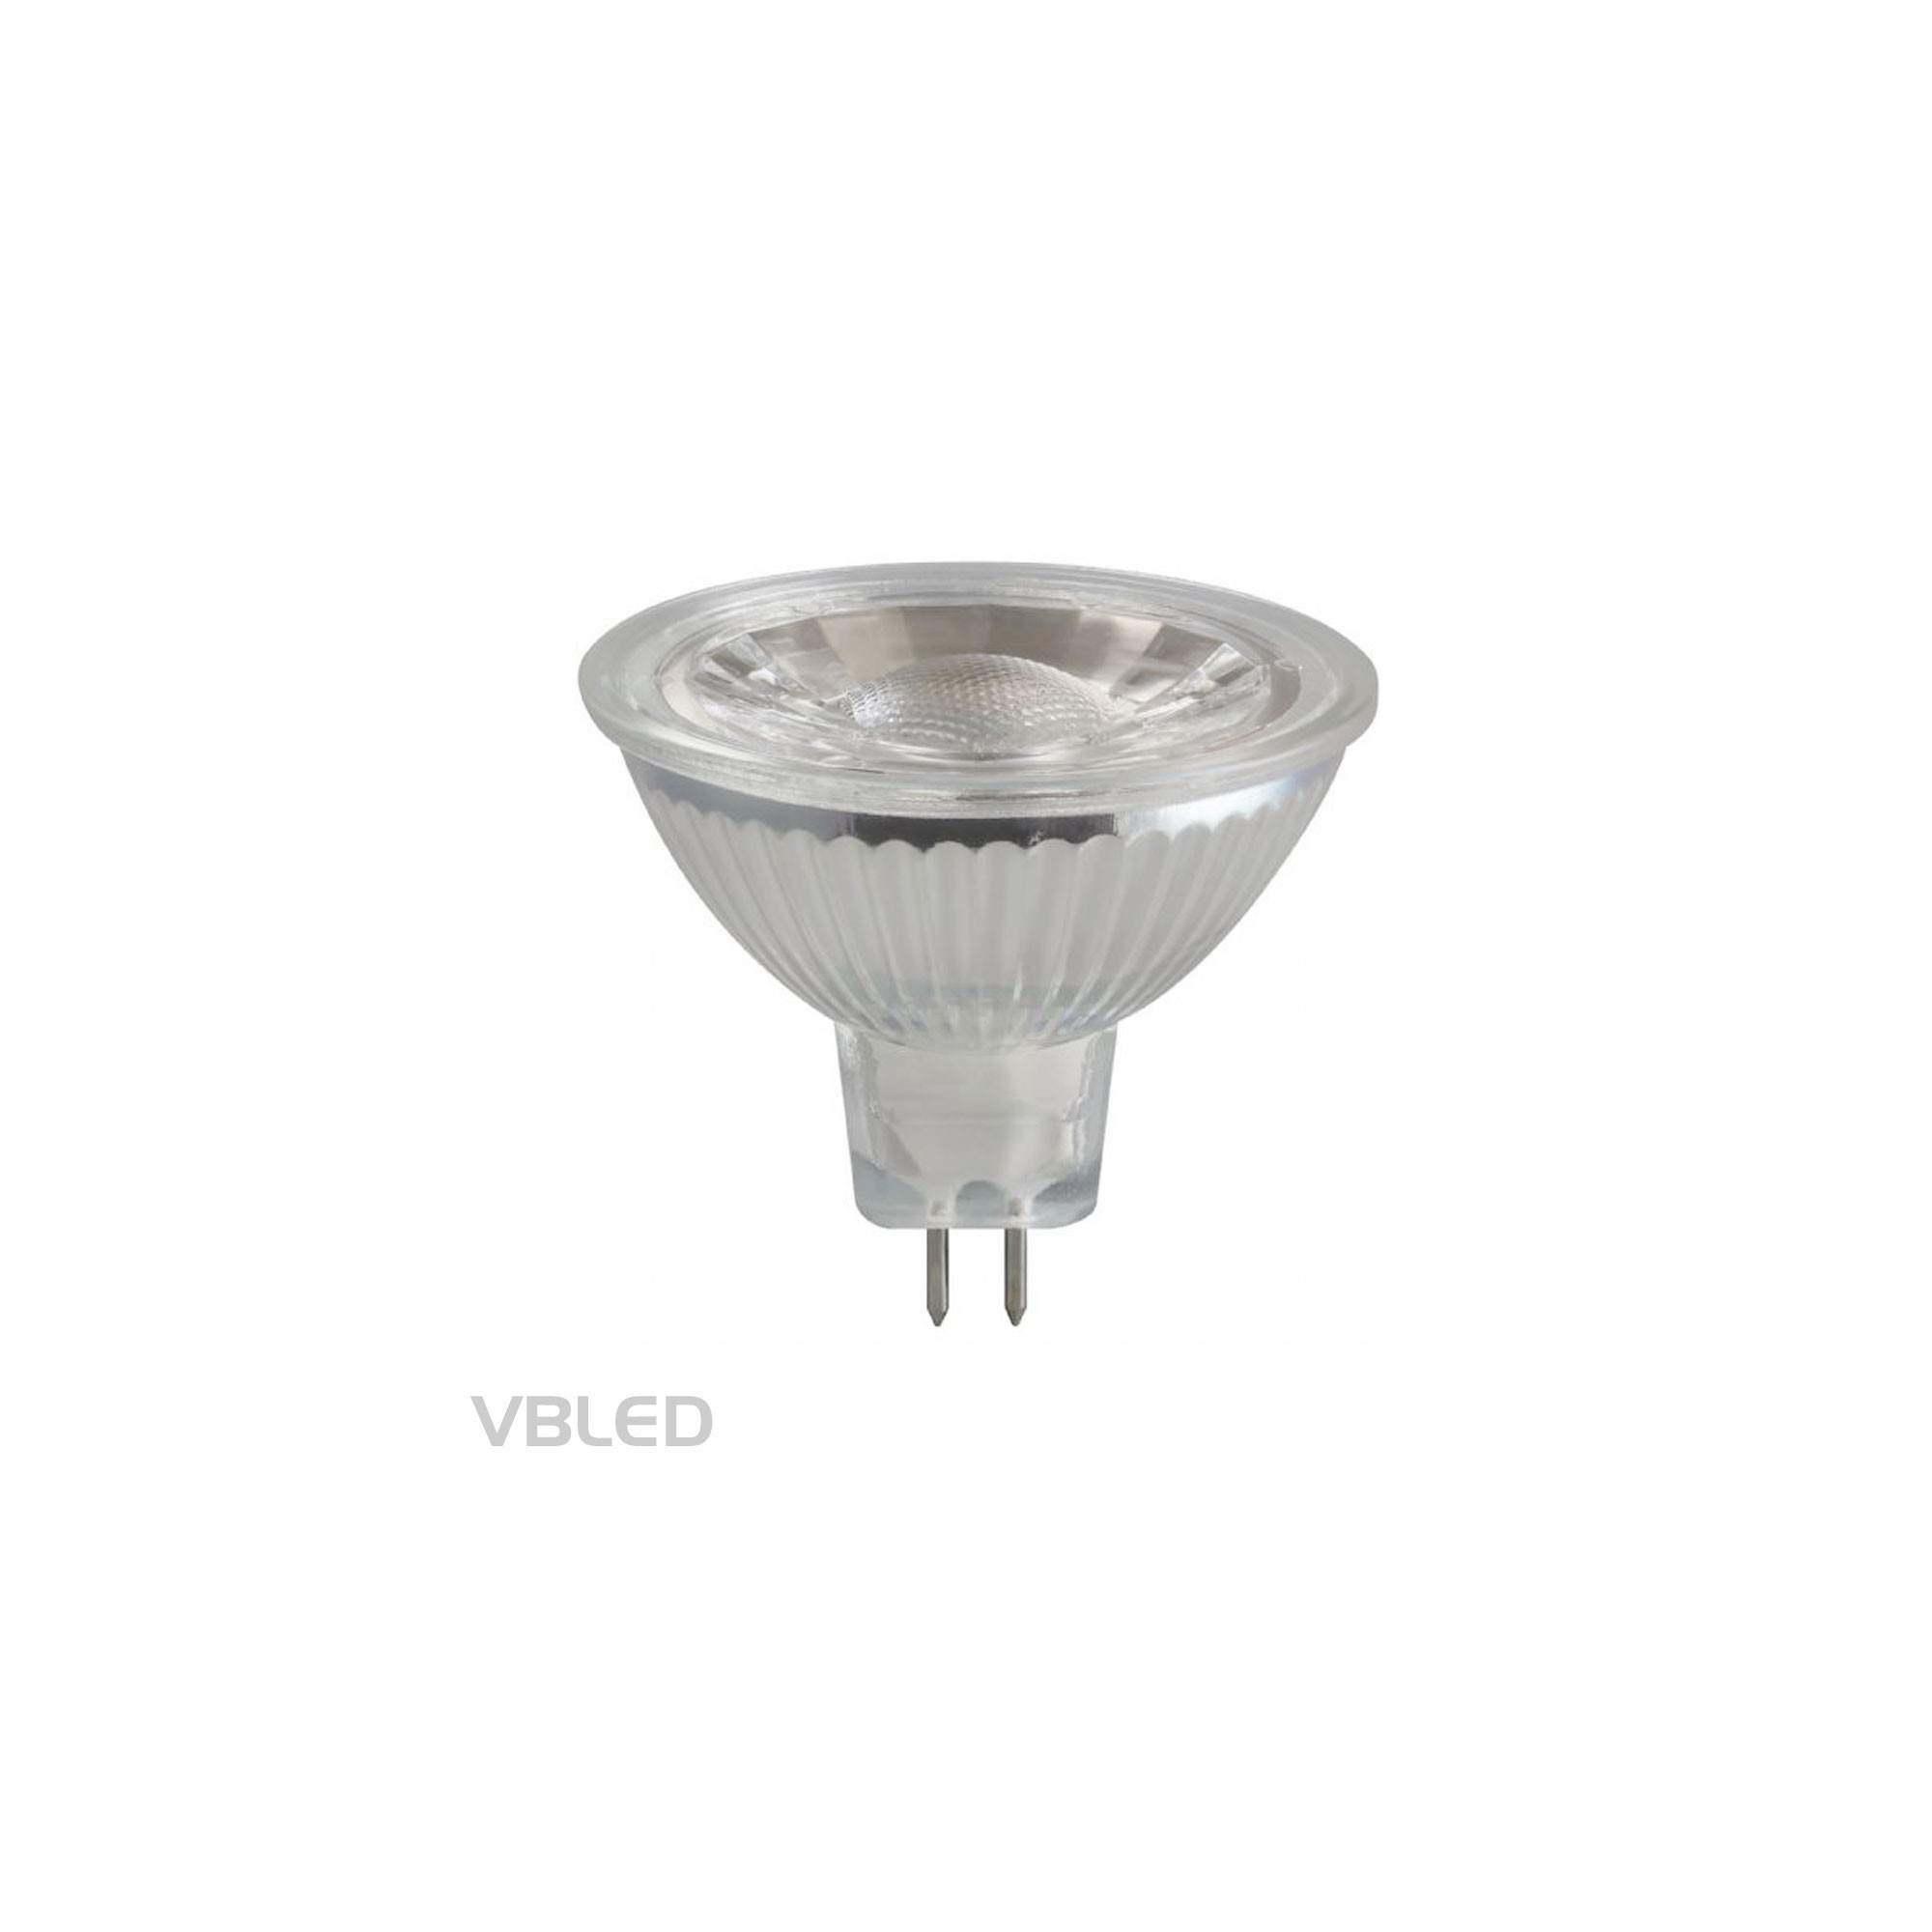 LED Spot Bulb GU5.3/ MR16 5W neutraal wit 4000K- 12V AC/DC